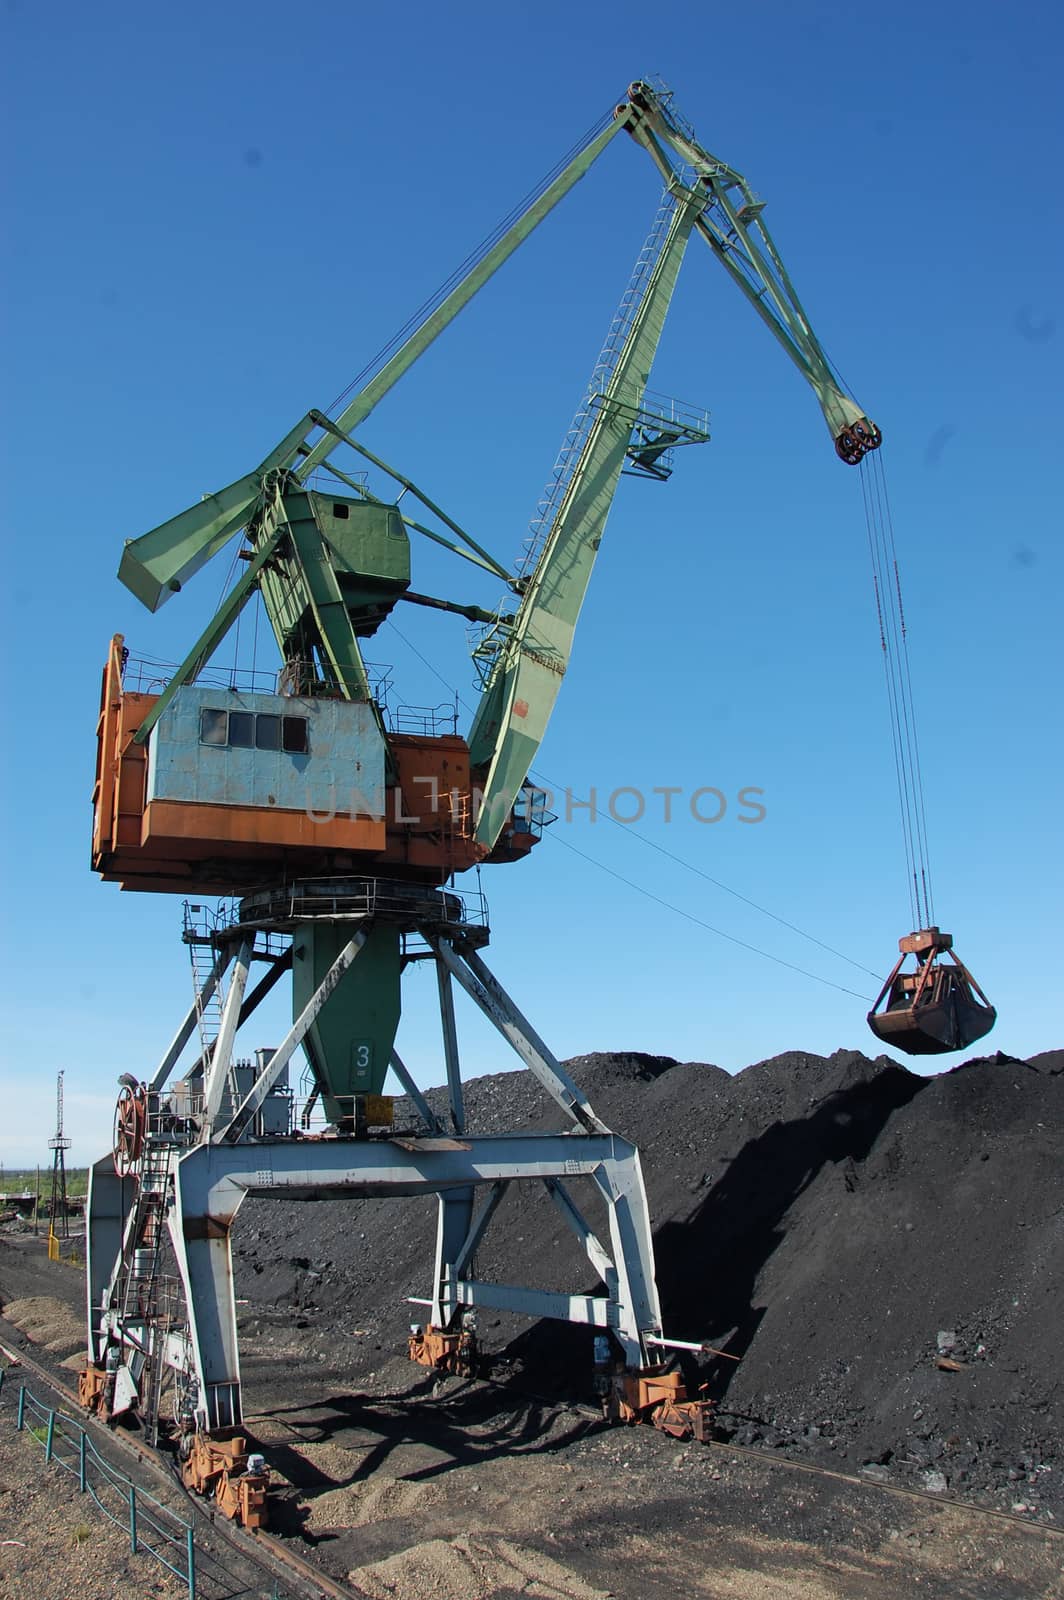 Dockside cargo crane uploads coal at Kolyma port by danemo